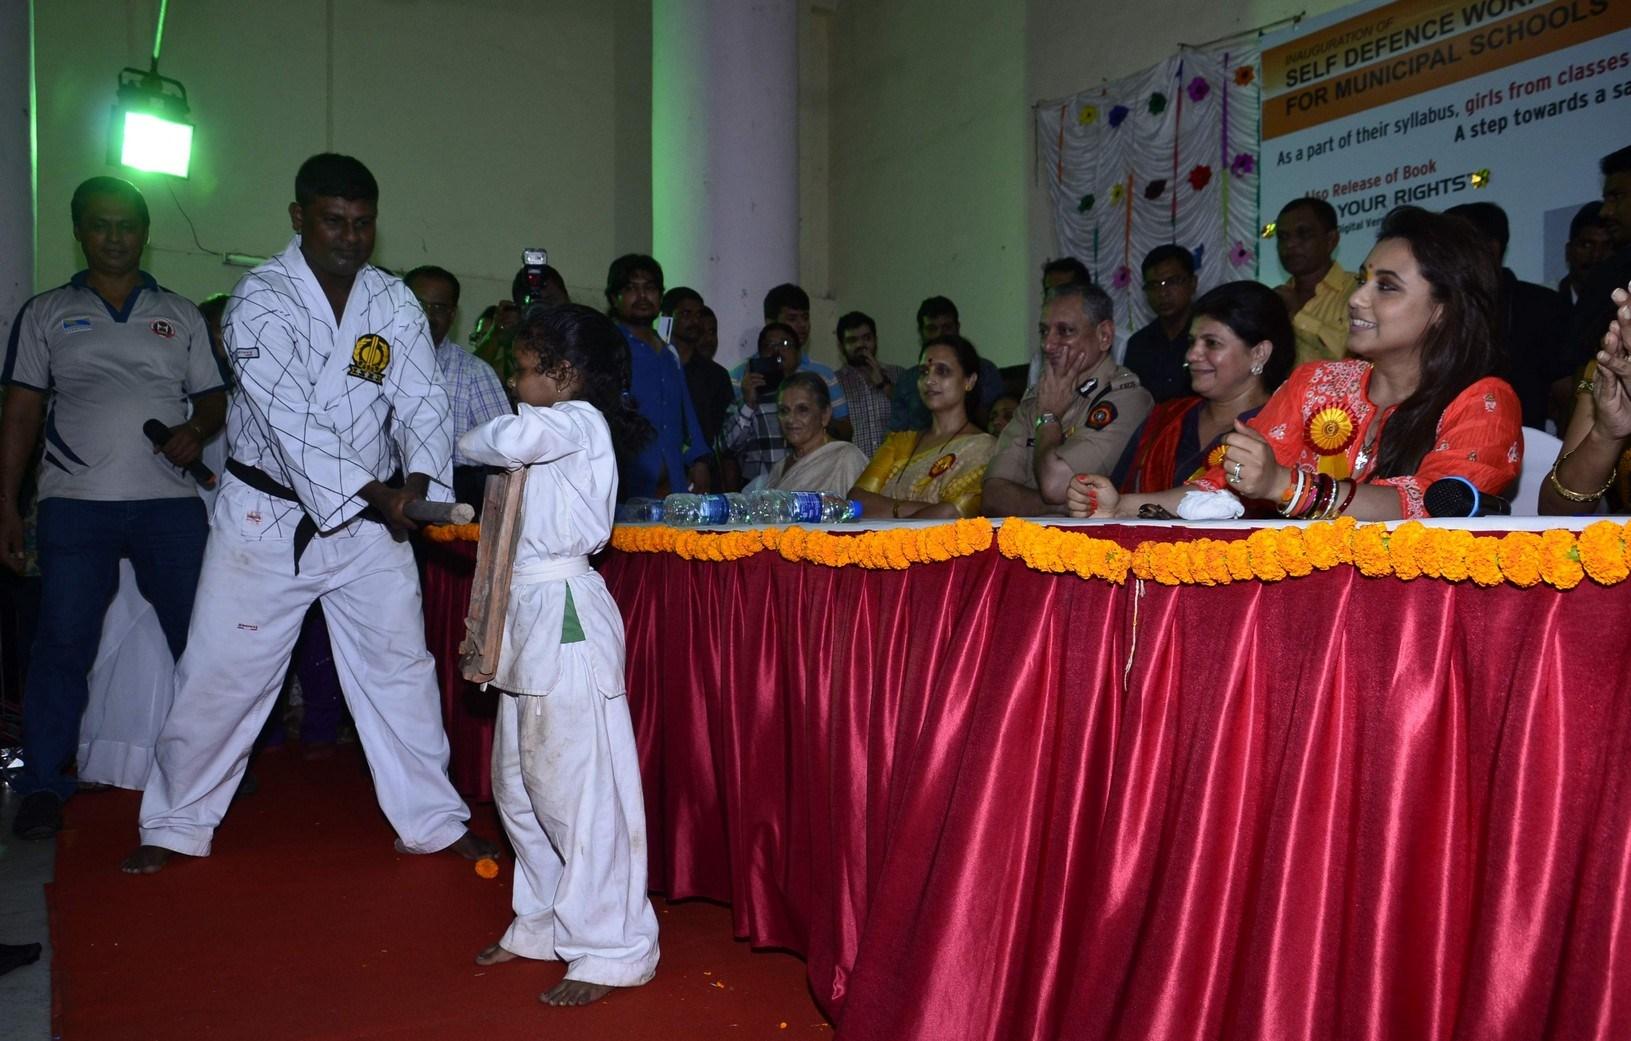 Rani Mukerji Inaugurates Self Defense Workshop